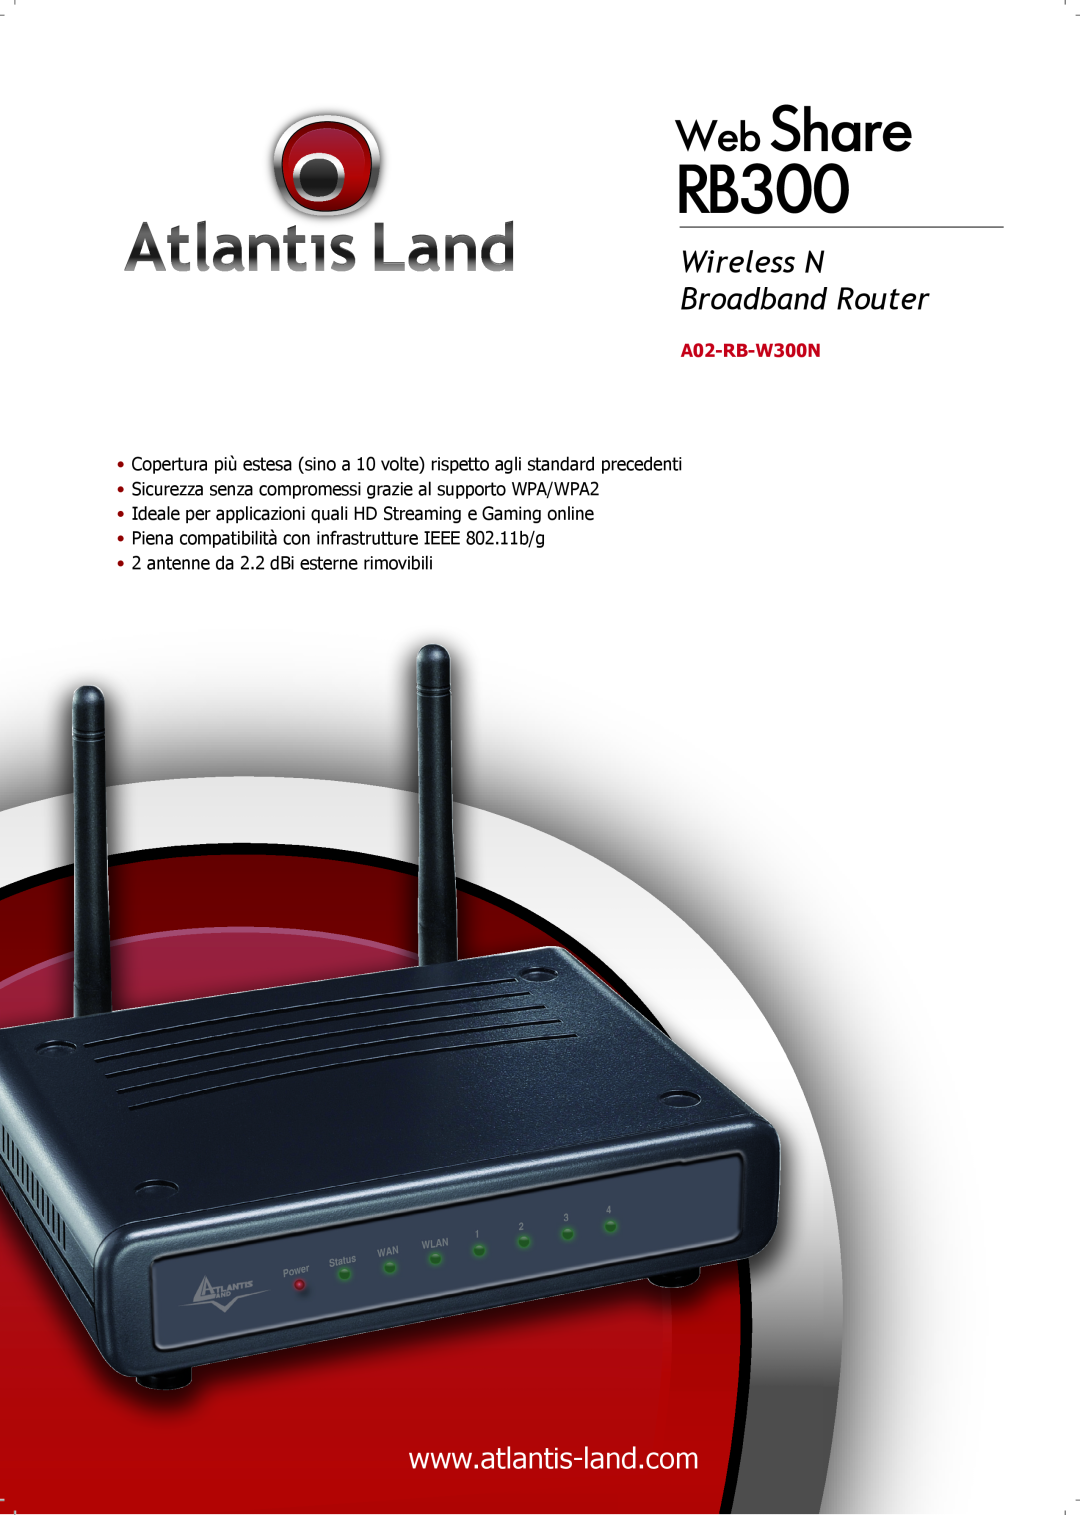 Atlantis Land manual RB300, WebShare, Wireless N Broadband Router, A02-RB-W300N, antenne da 2.2 dBi esterne rimovibili 